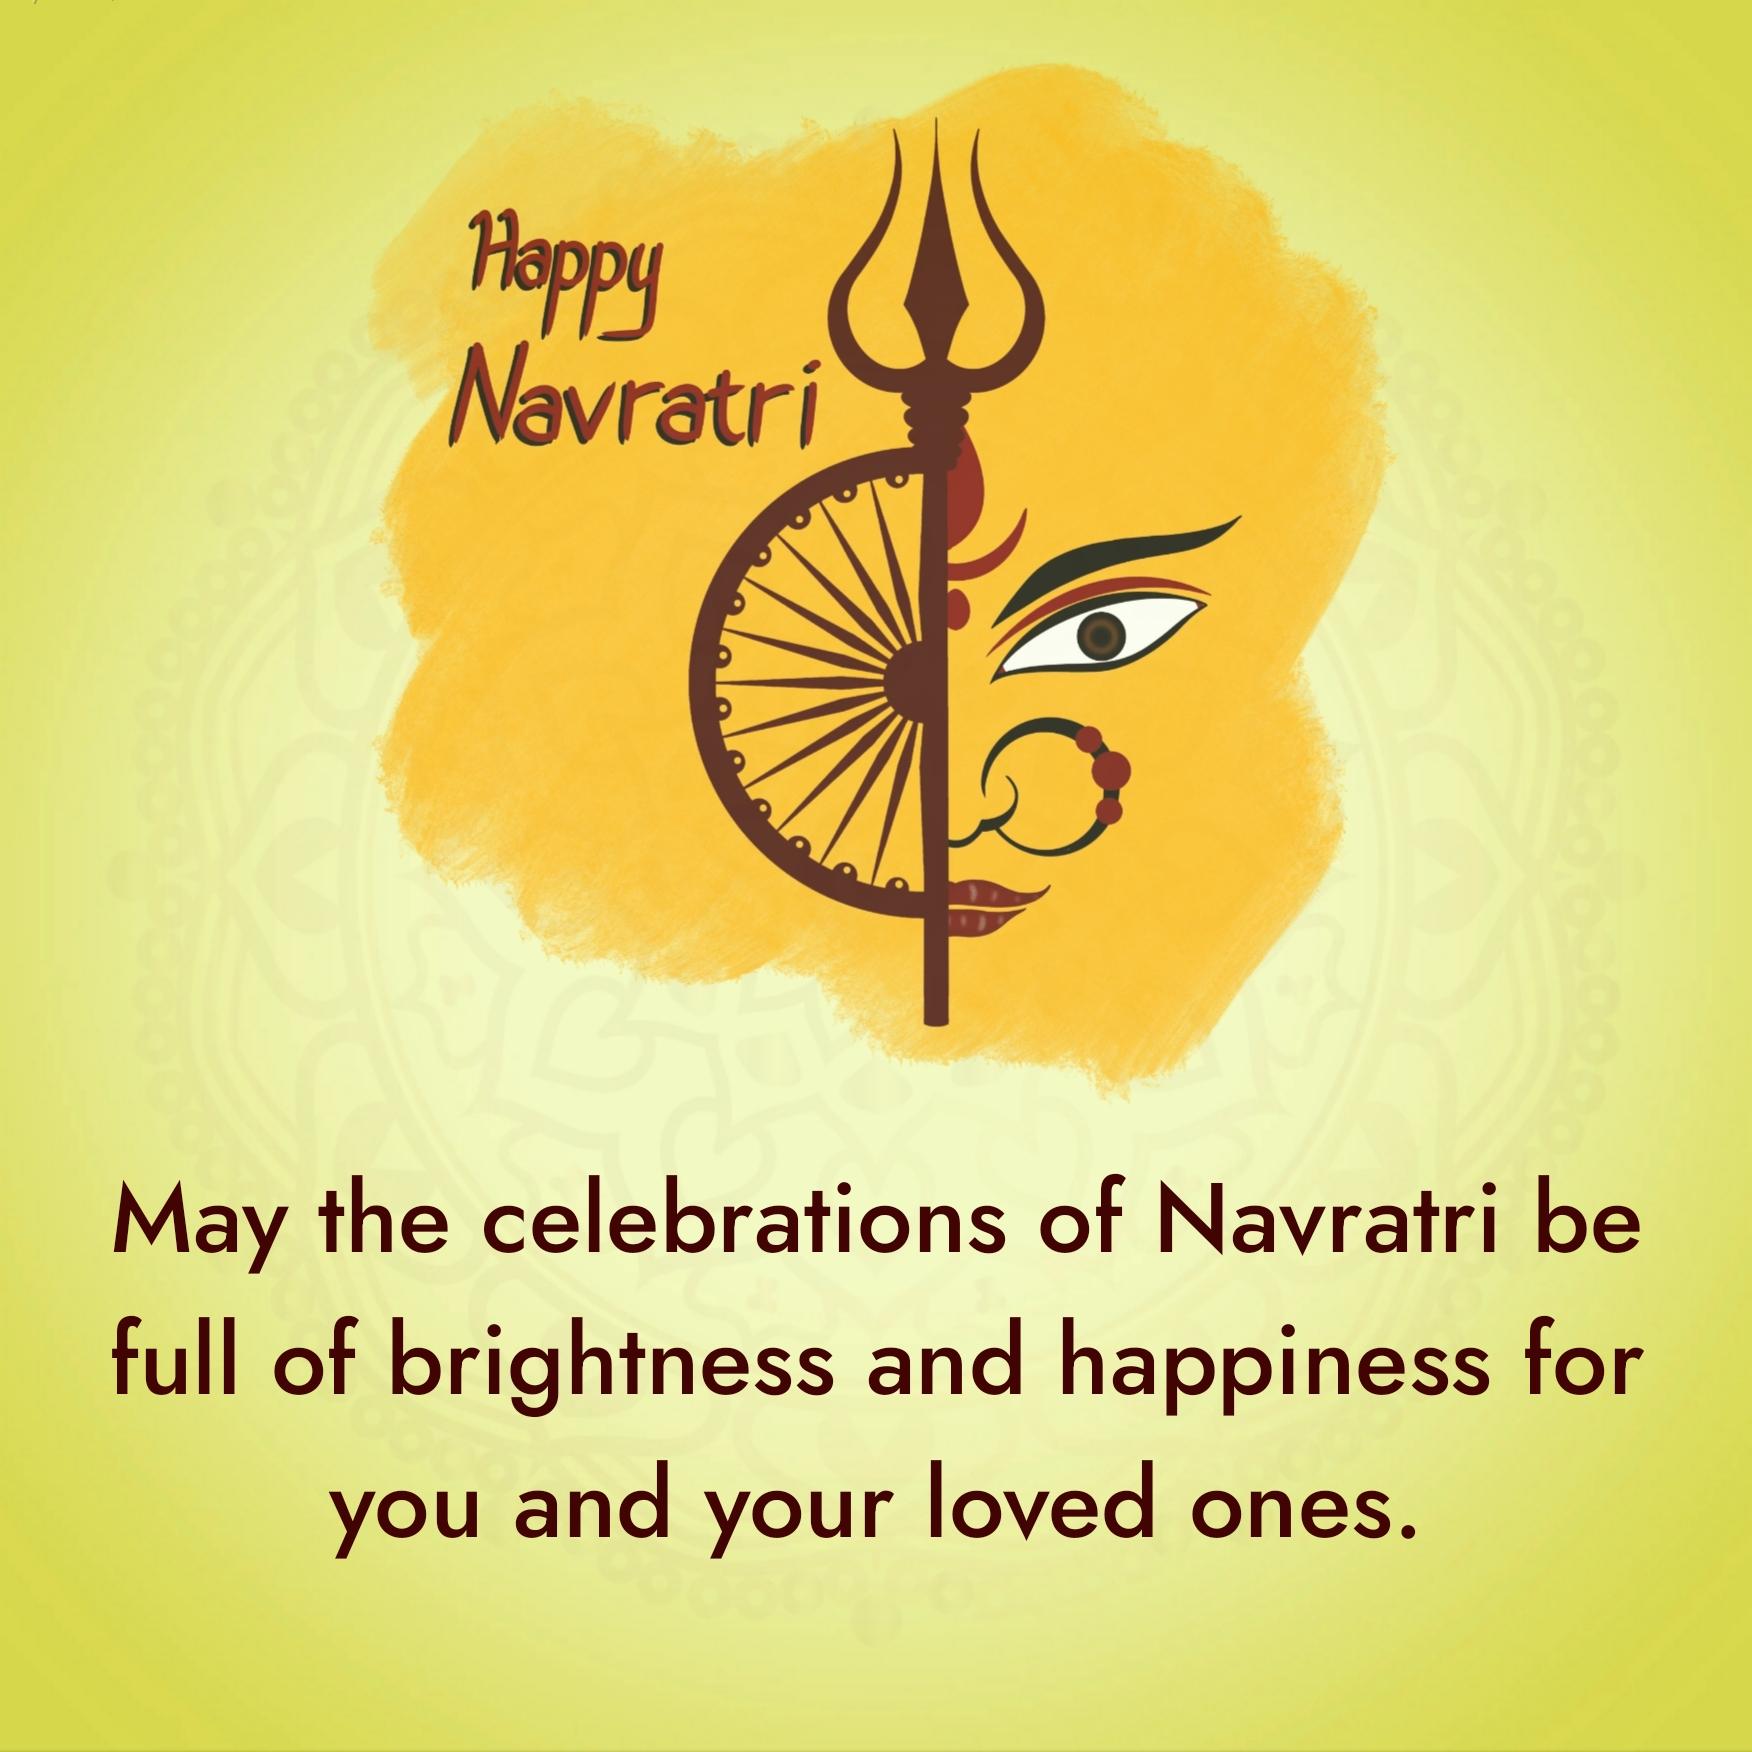 May the celebrations of Navratri be full of brightness